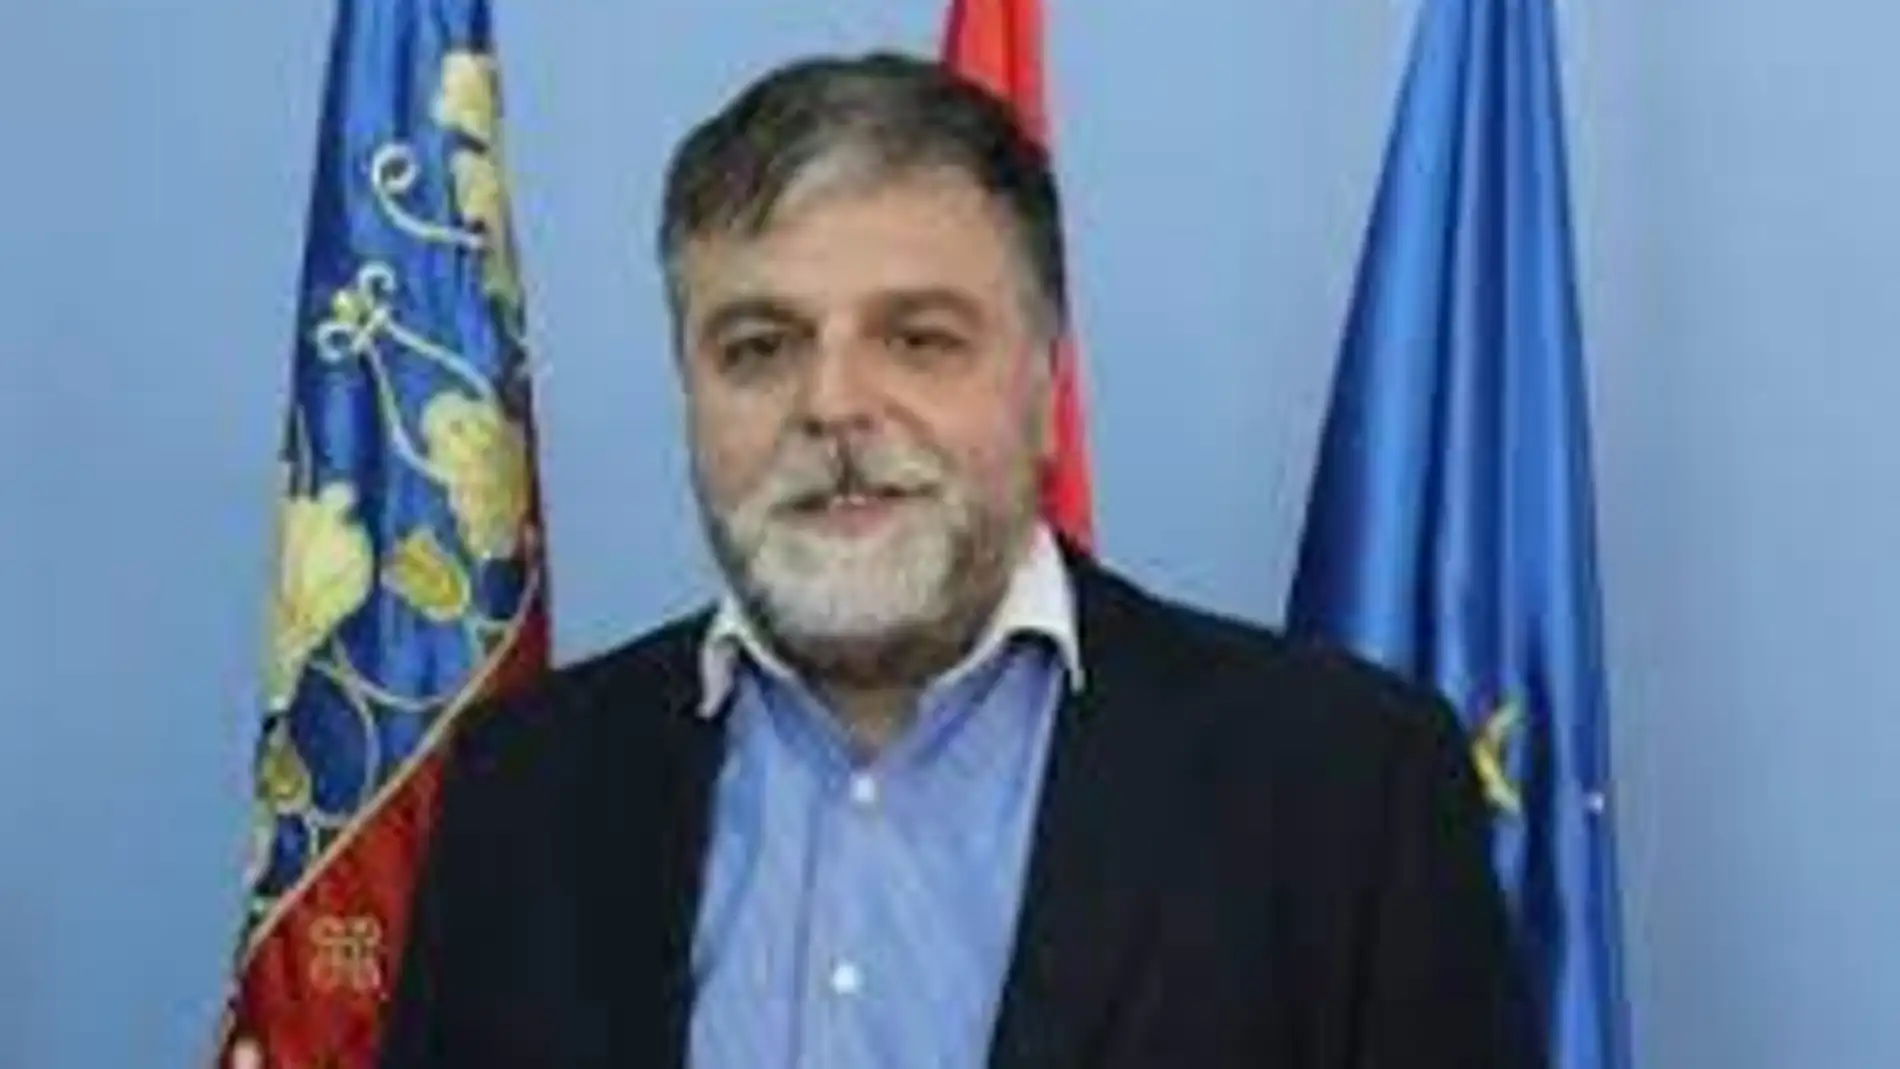 El alcalde de Villena se suma al frente institucional en defensa del sector del calzado